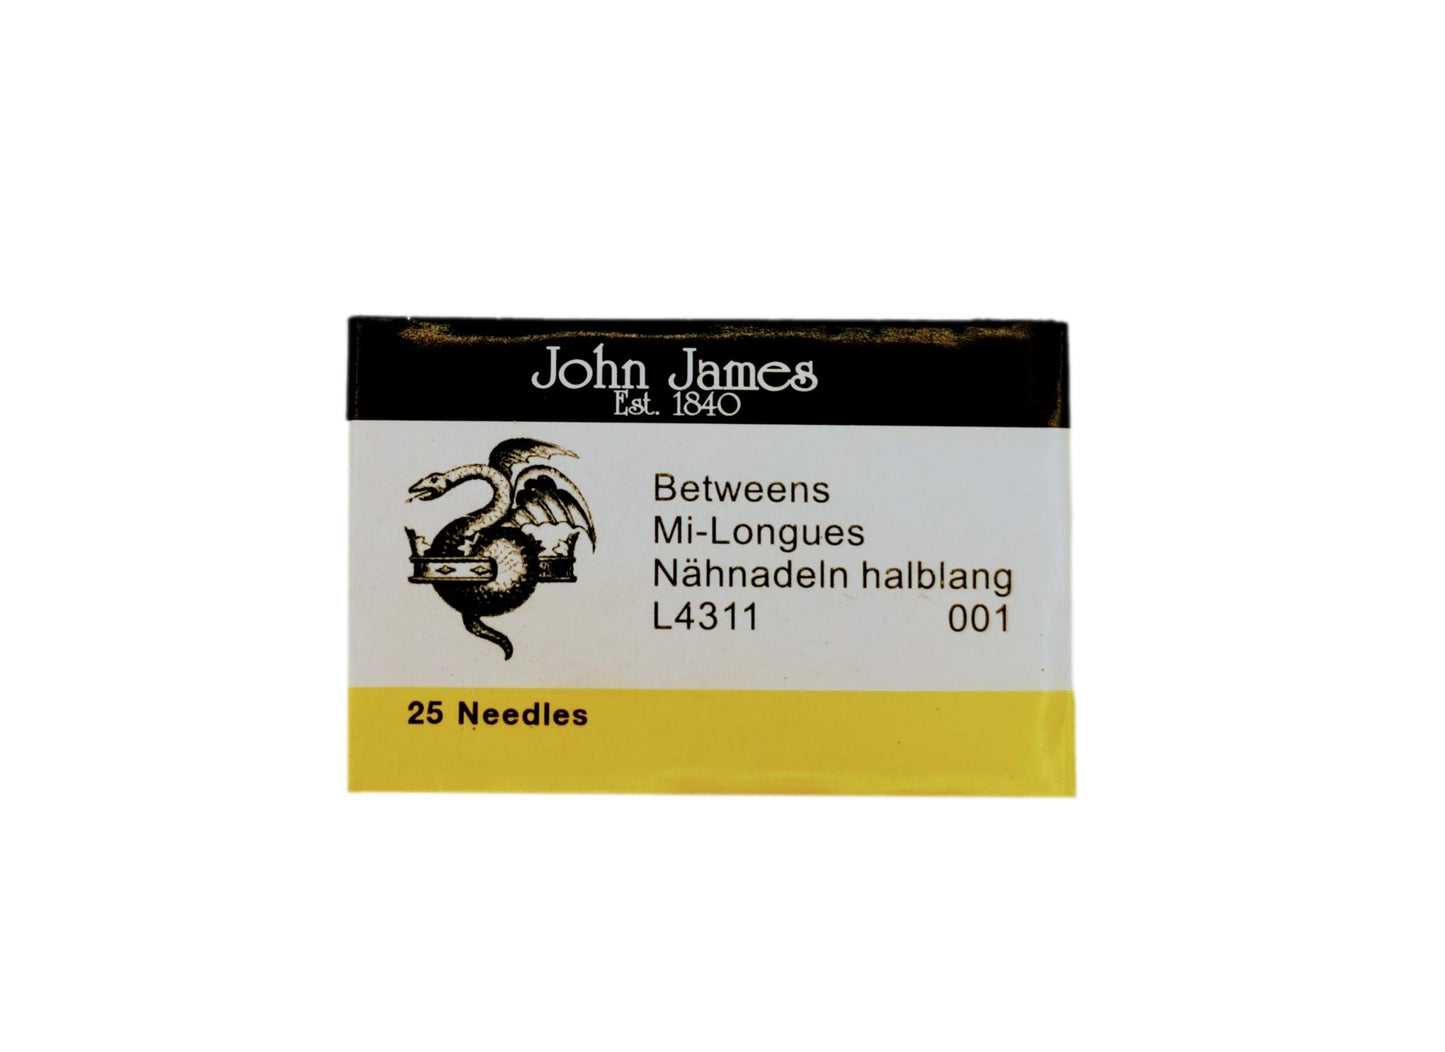 John James - Betweens/Quilting -  Envelope of  25 Hand Sewing Needles